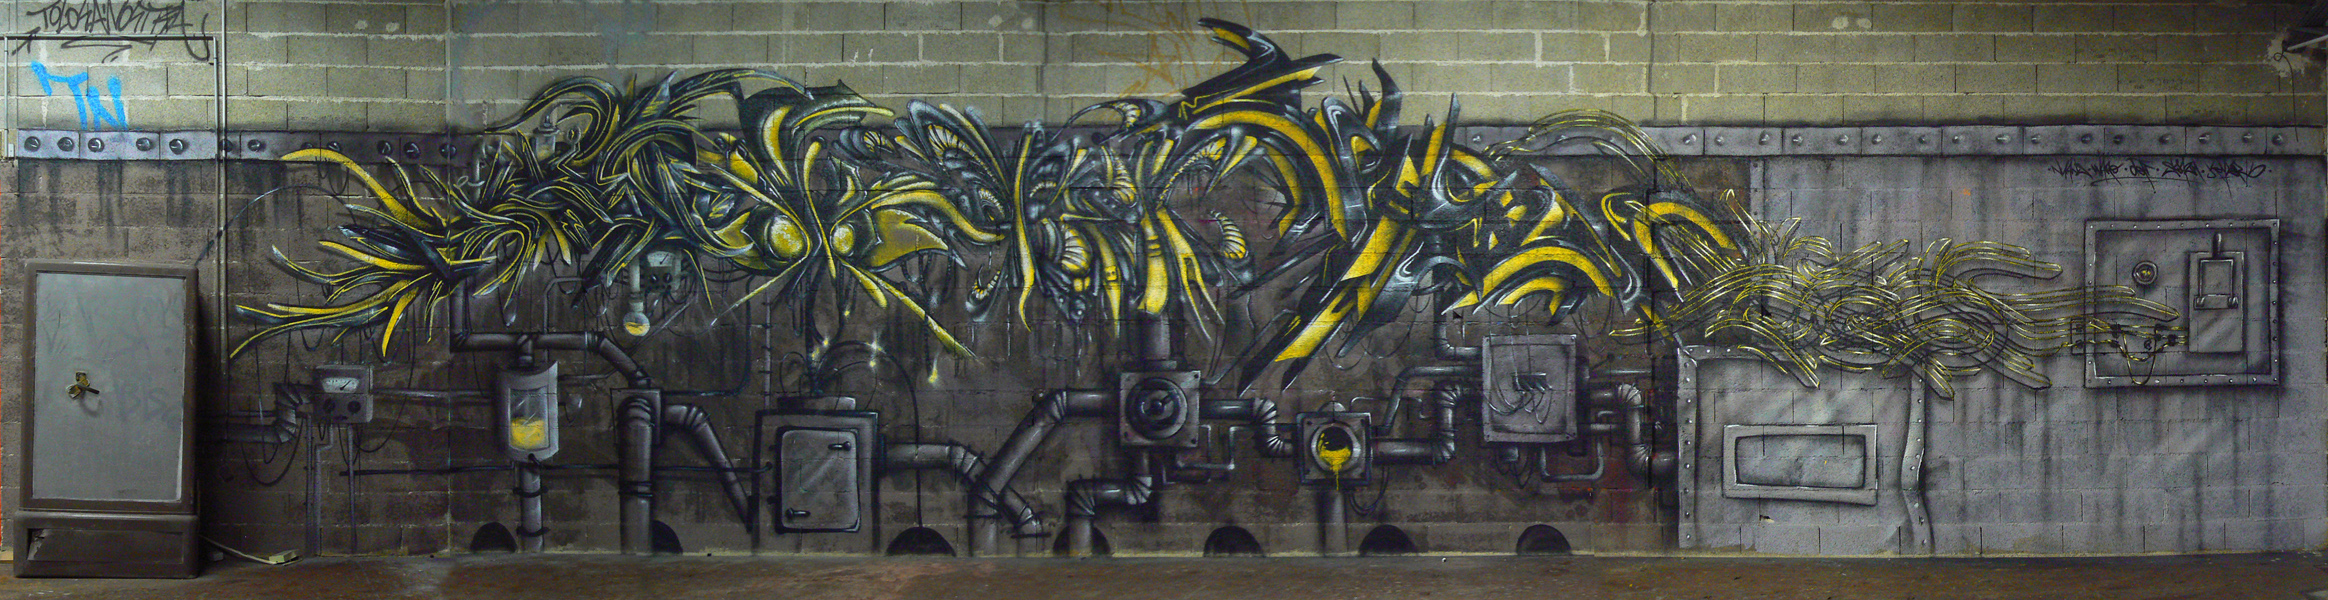 graffiti toulouse